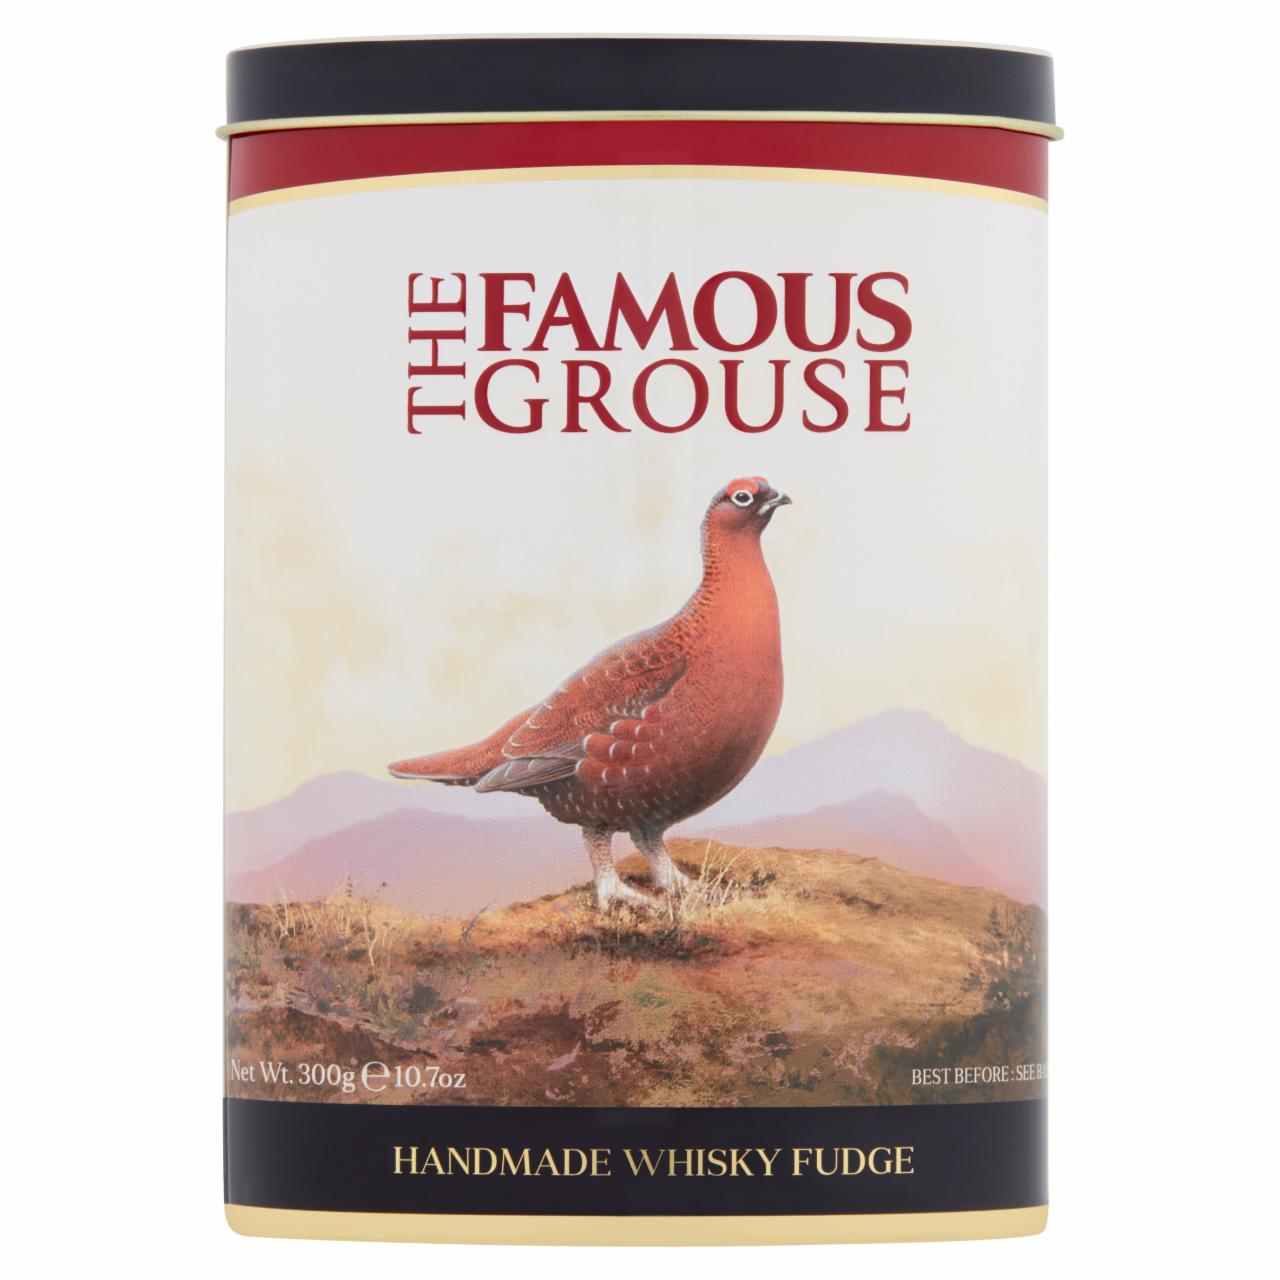 Képek - Gardiners of Scotland The Famous Grouse whisky-s puha karamella 300 g